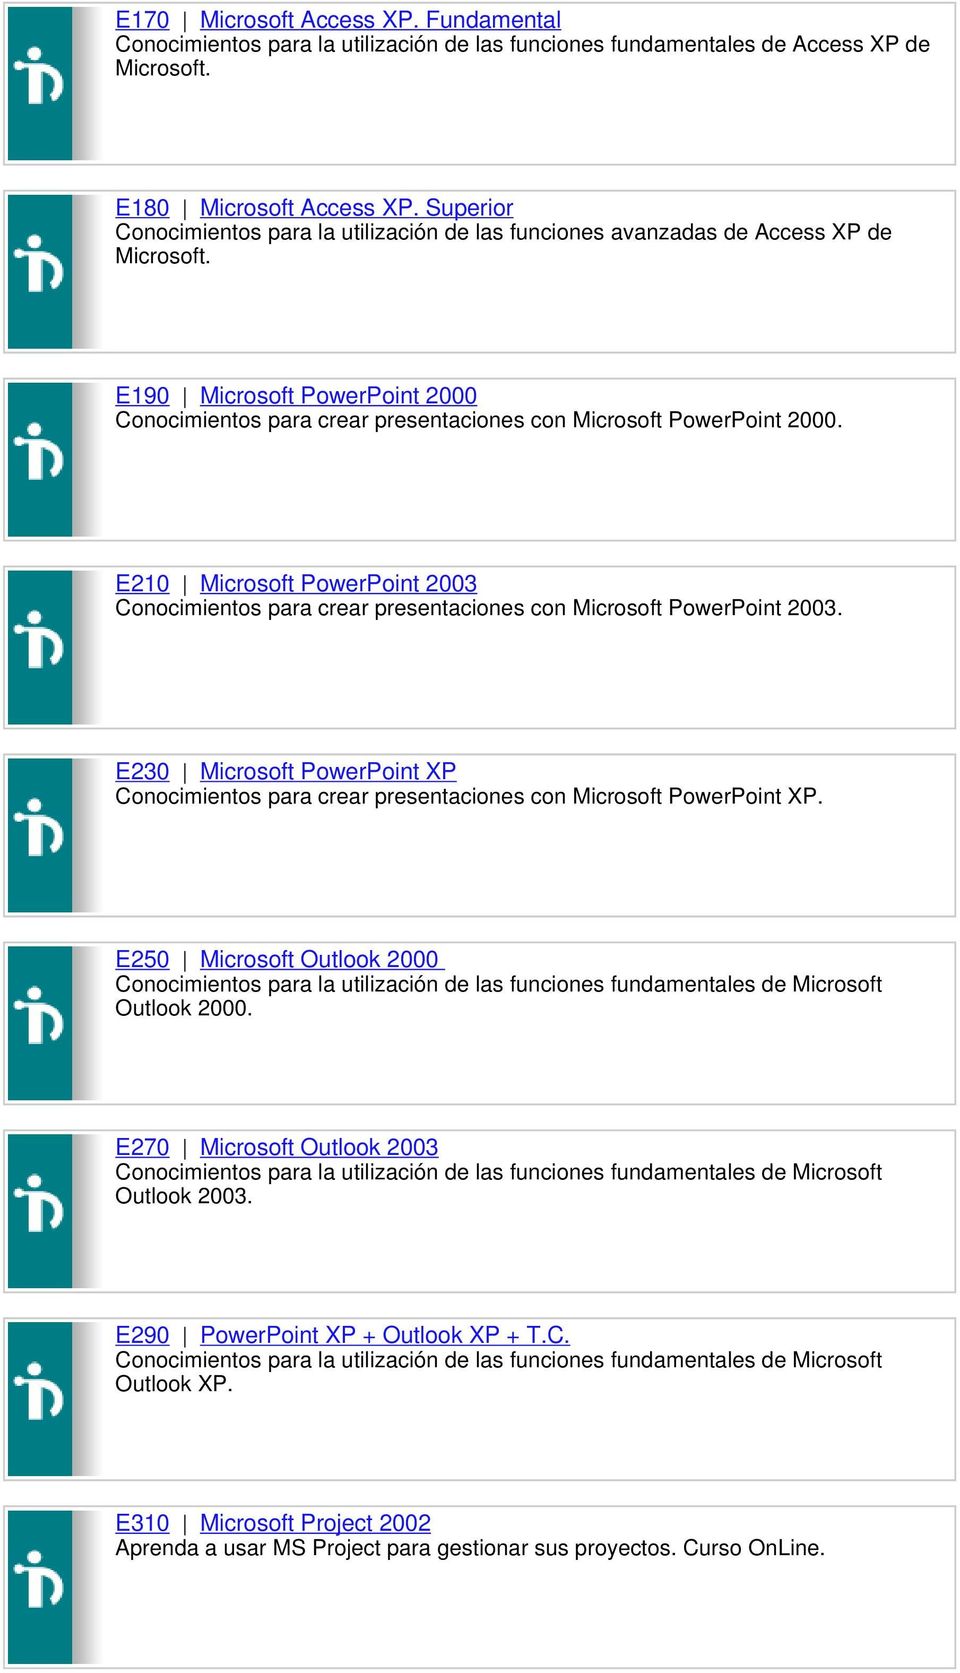 E210 Microsoft PowerPoint 2003 Conocimientos para crear presentaciones con Microsoft PowerPoint 2003.